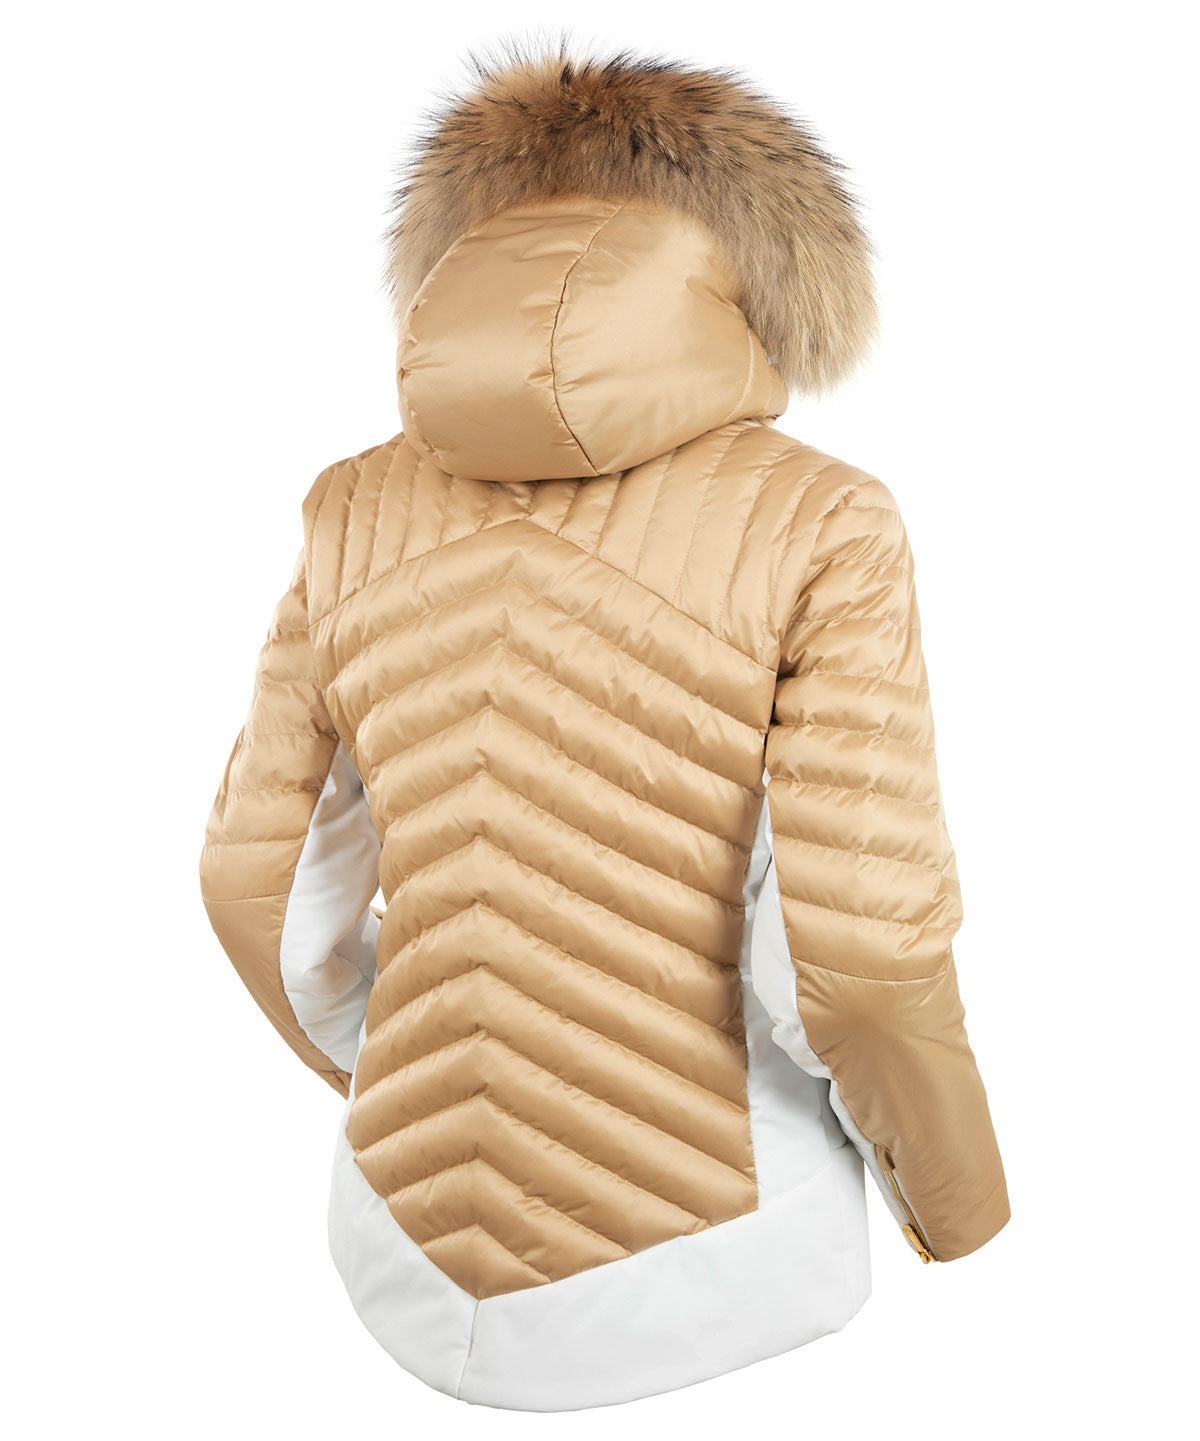 NILS Winter Jacket  Winter jackets, Clothes design, Fashion